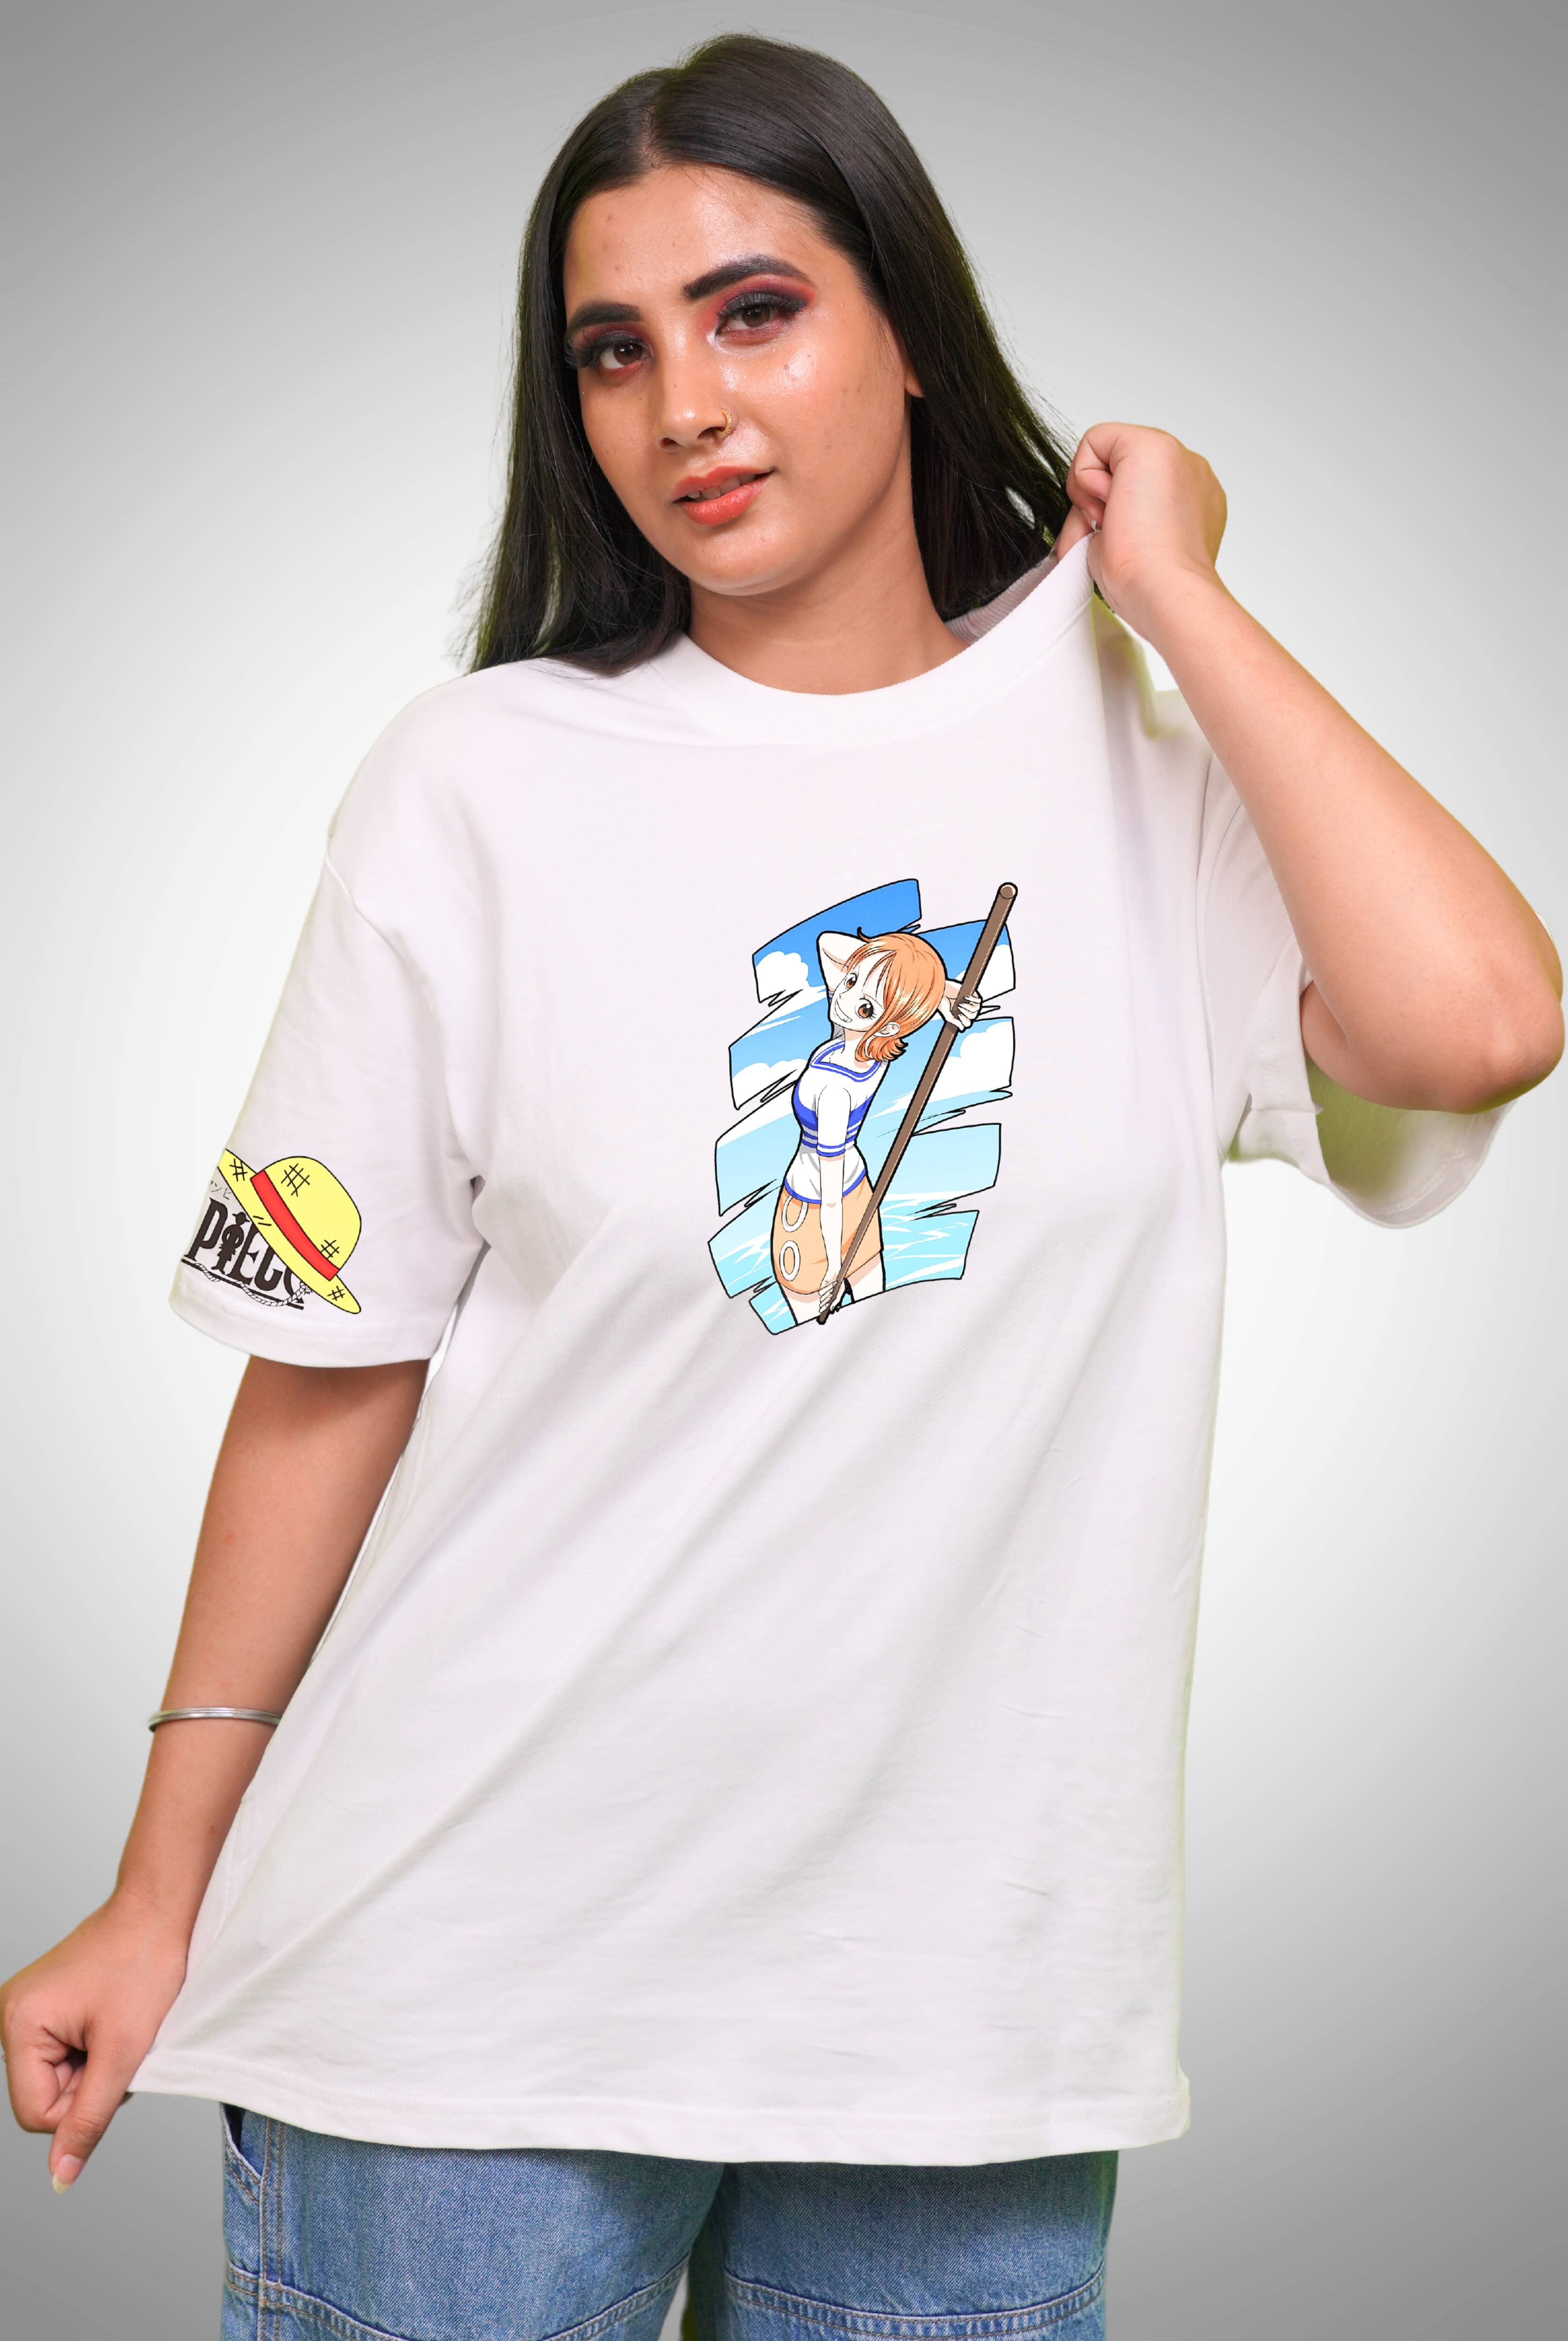 One Piece Women's Oversized Anime T-Shirt